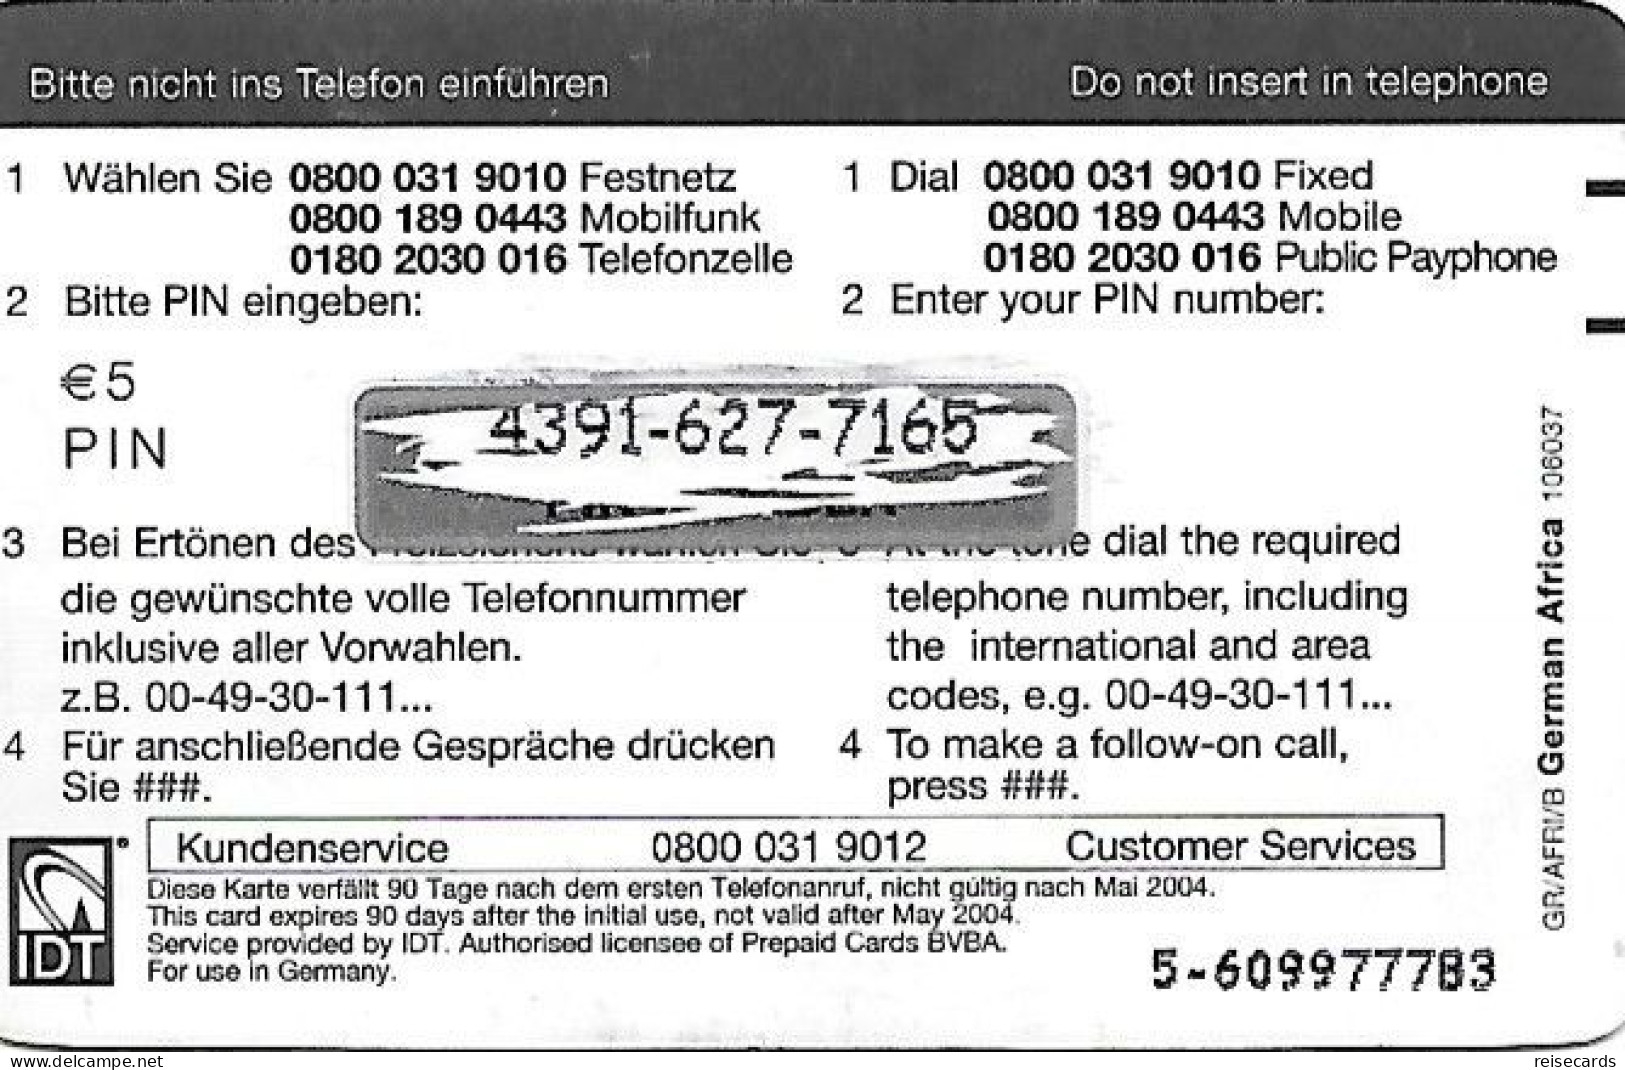 Germany: Prepaid IDT Afrika Karte 05.04 - Cellulari, Carte Prepagate E Ricariche